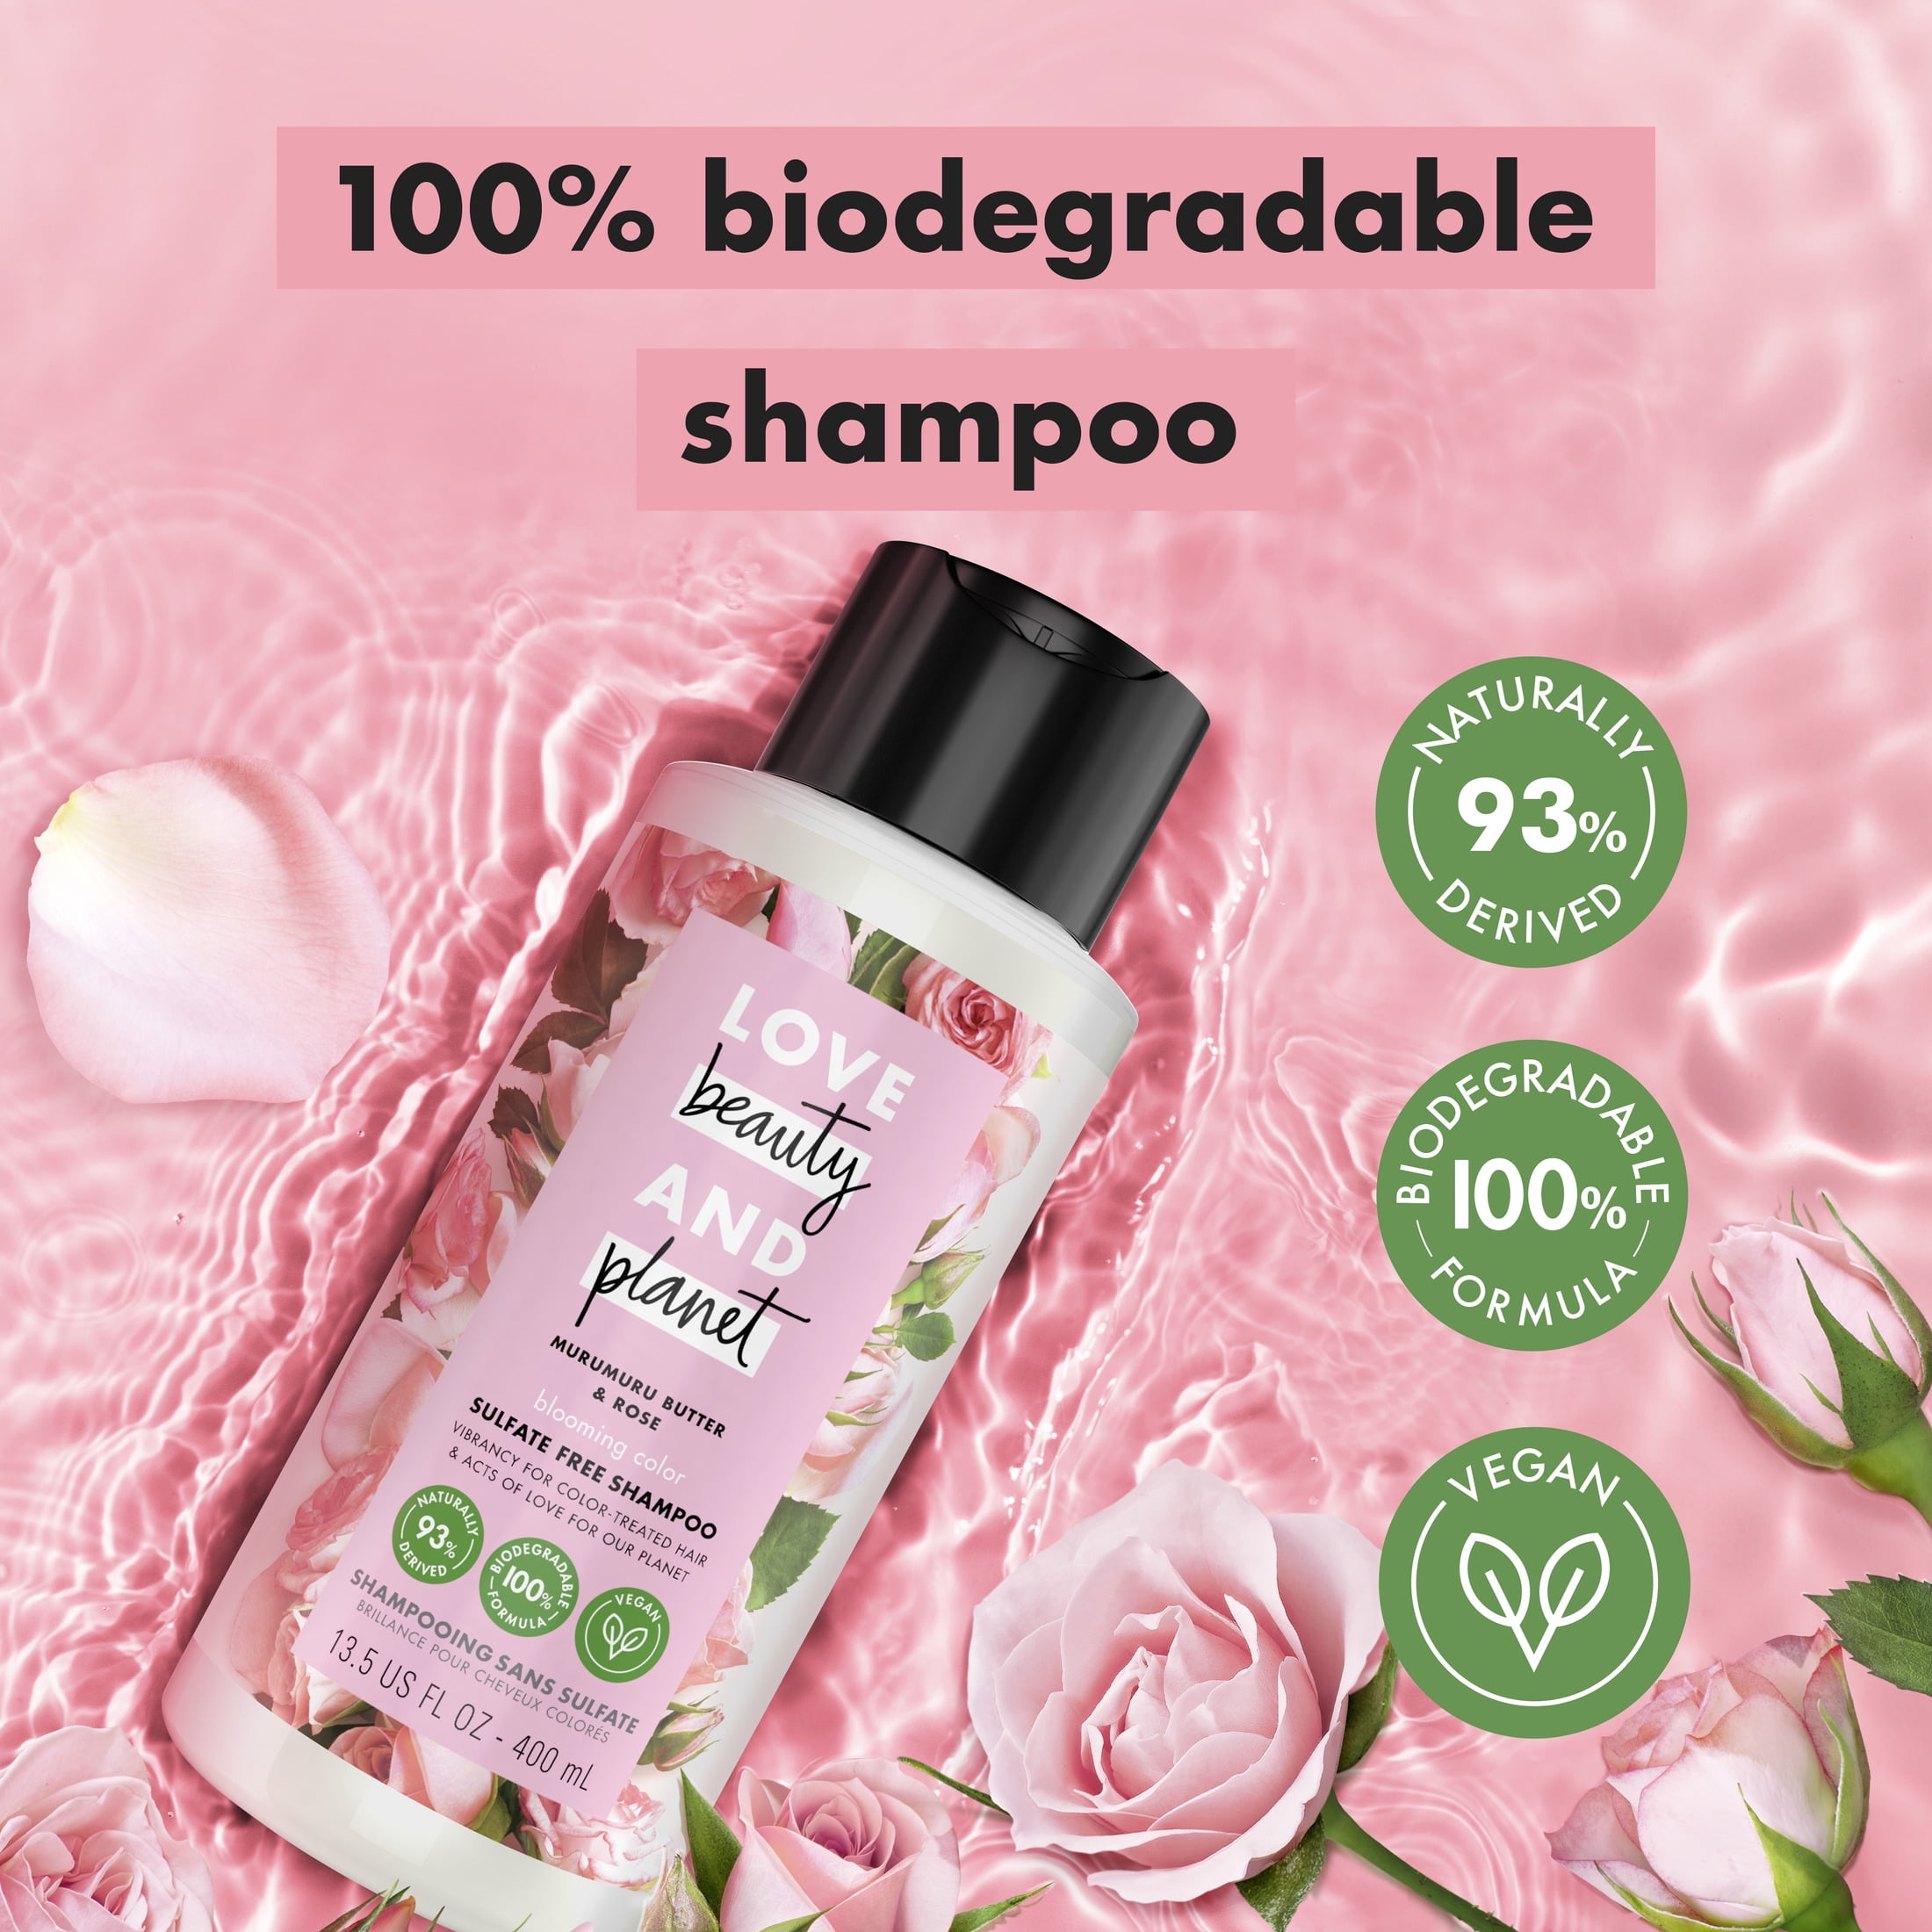 Beauty and Planet Murumuru Butter & Rose Blooming Color Moisturizing Nourishing Daily Shampoo with Coconut Oil, 13.5 fl oz Walmart.com